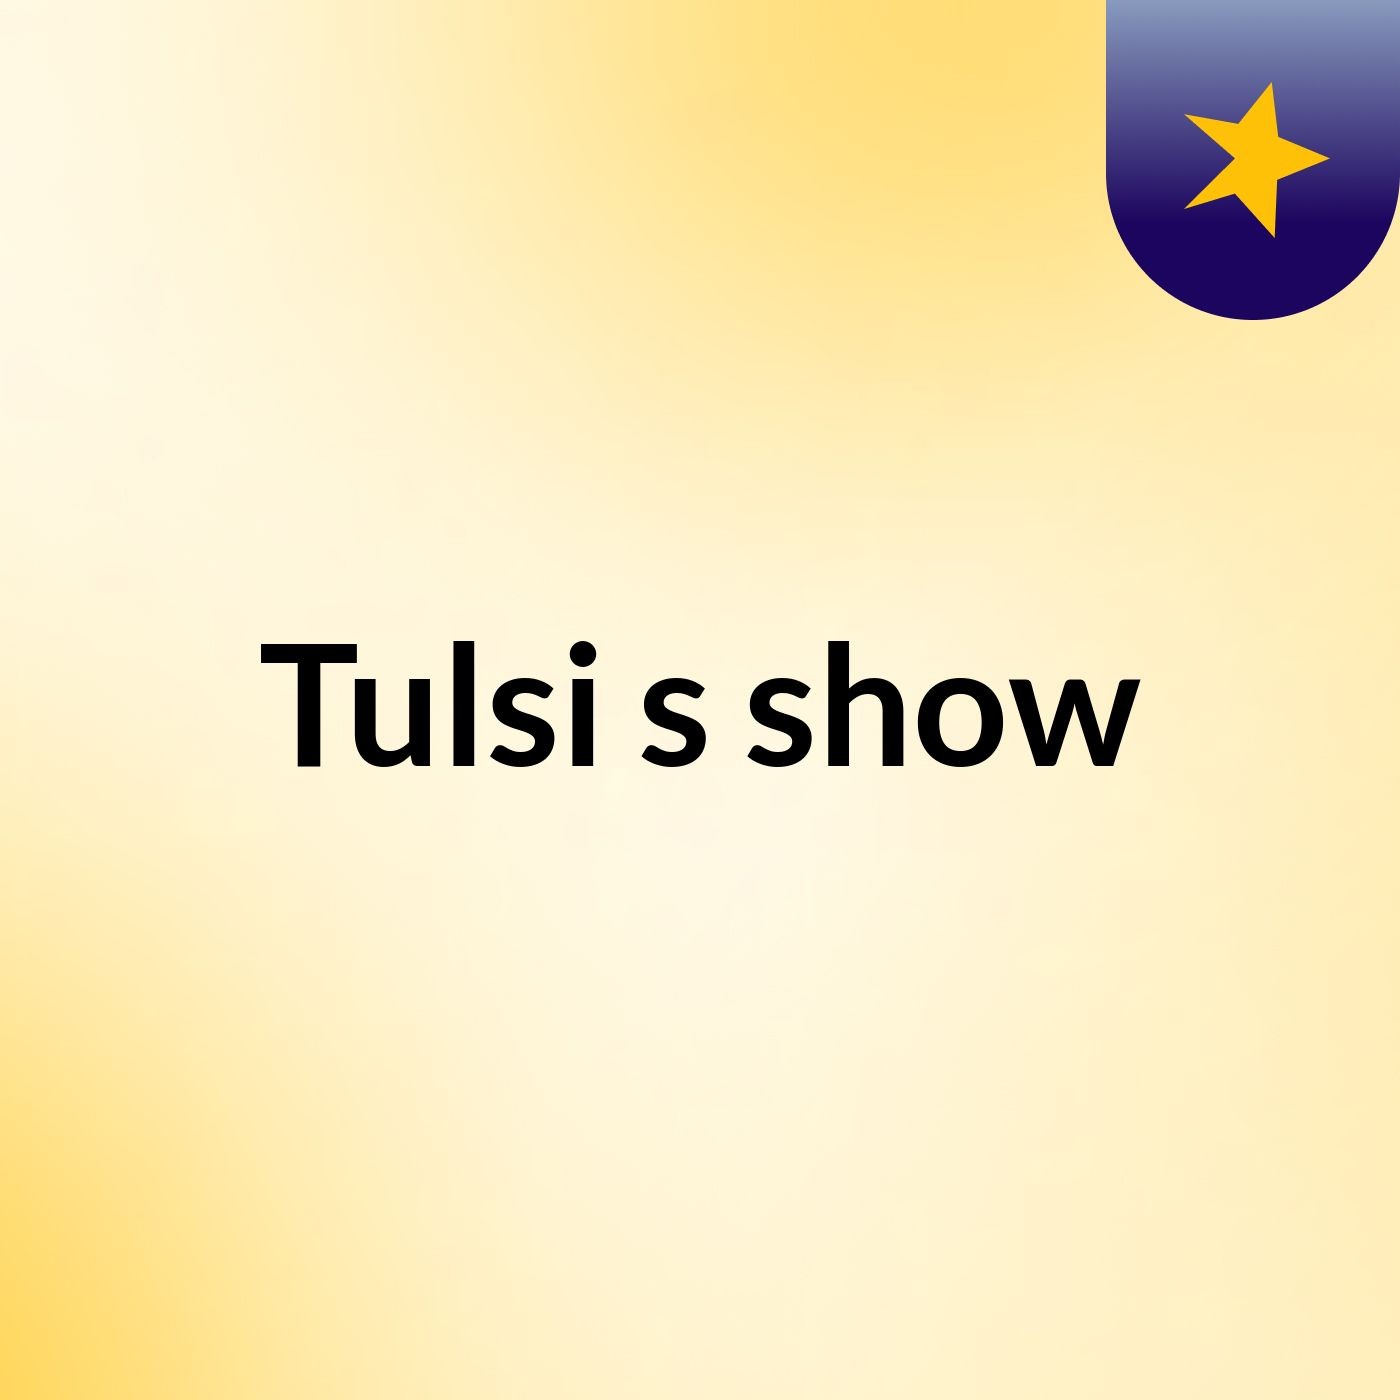 Tulsi's show